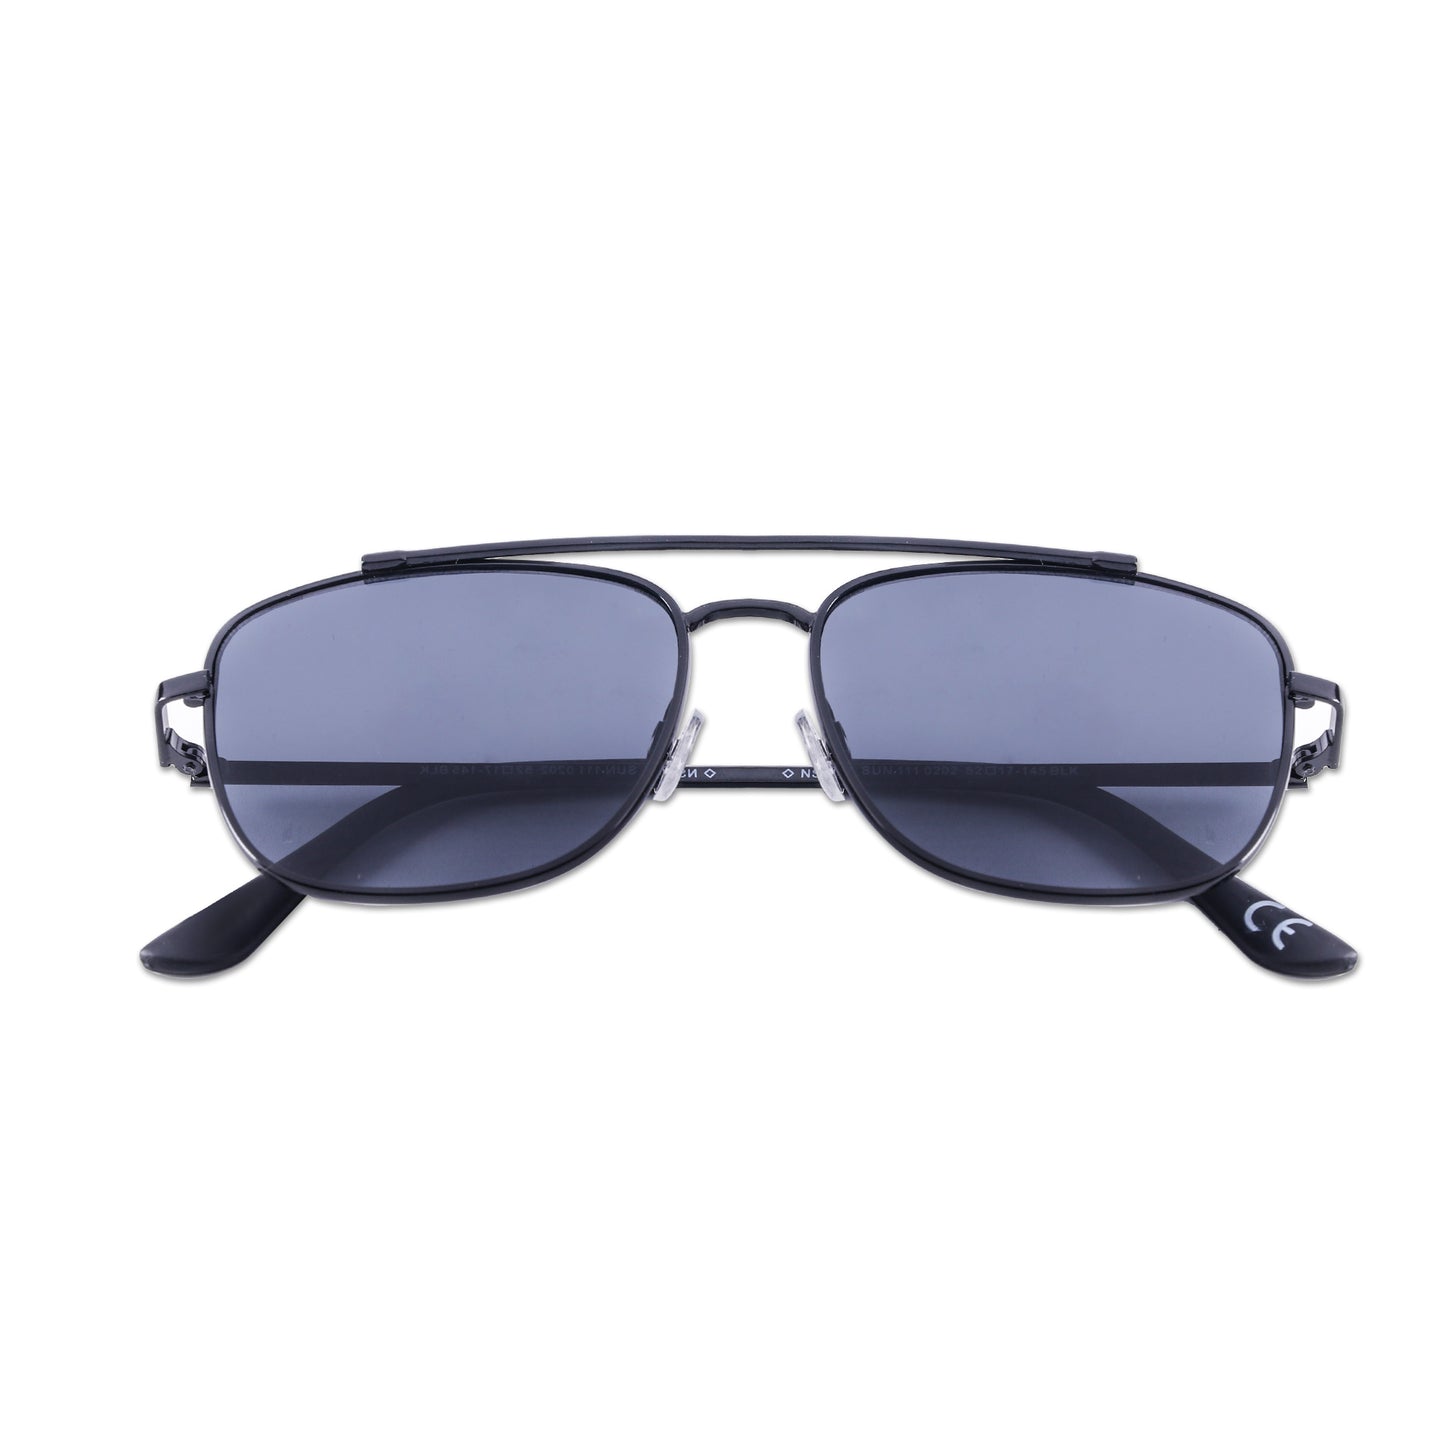 2.5 NVG UV Protected Black Square Sunglasses